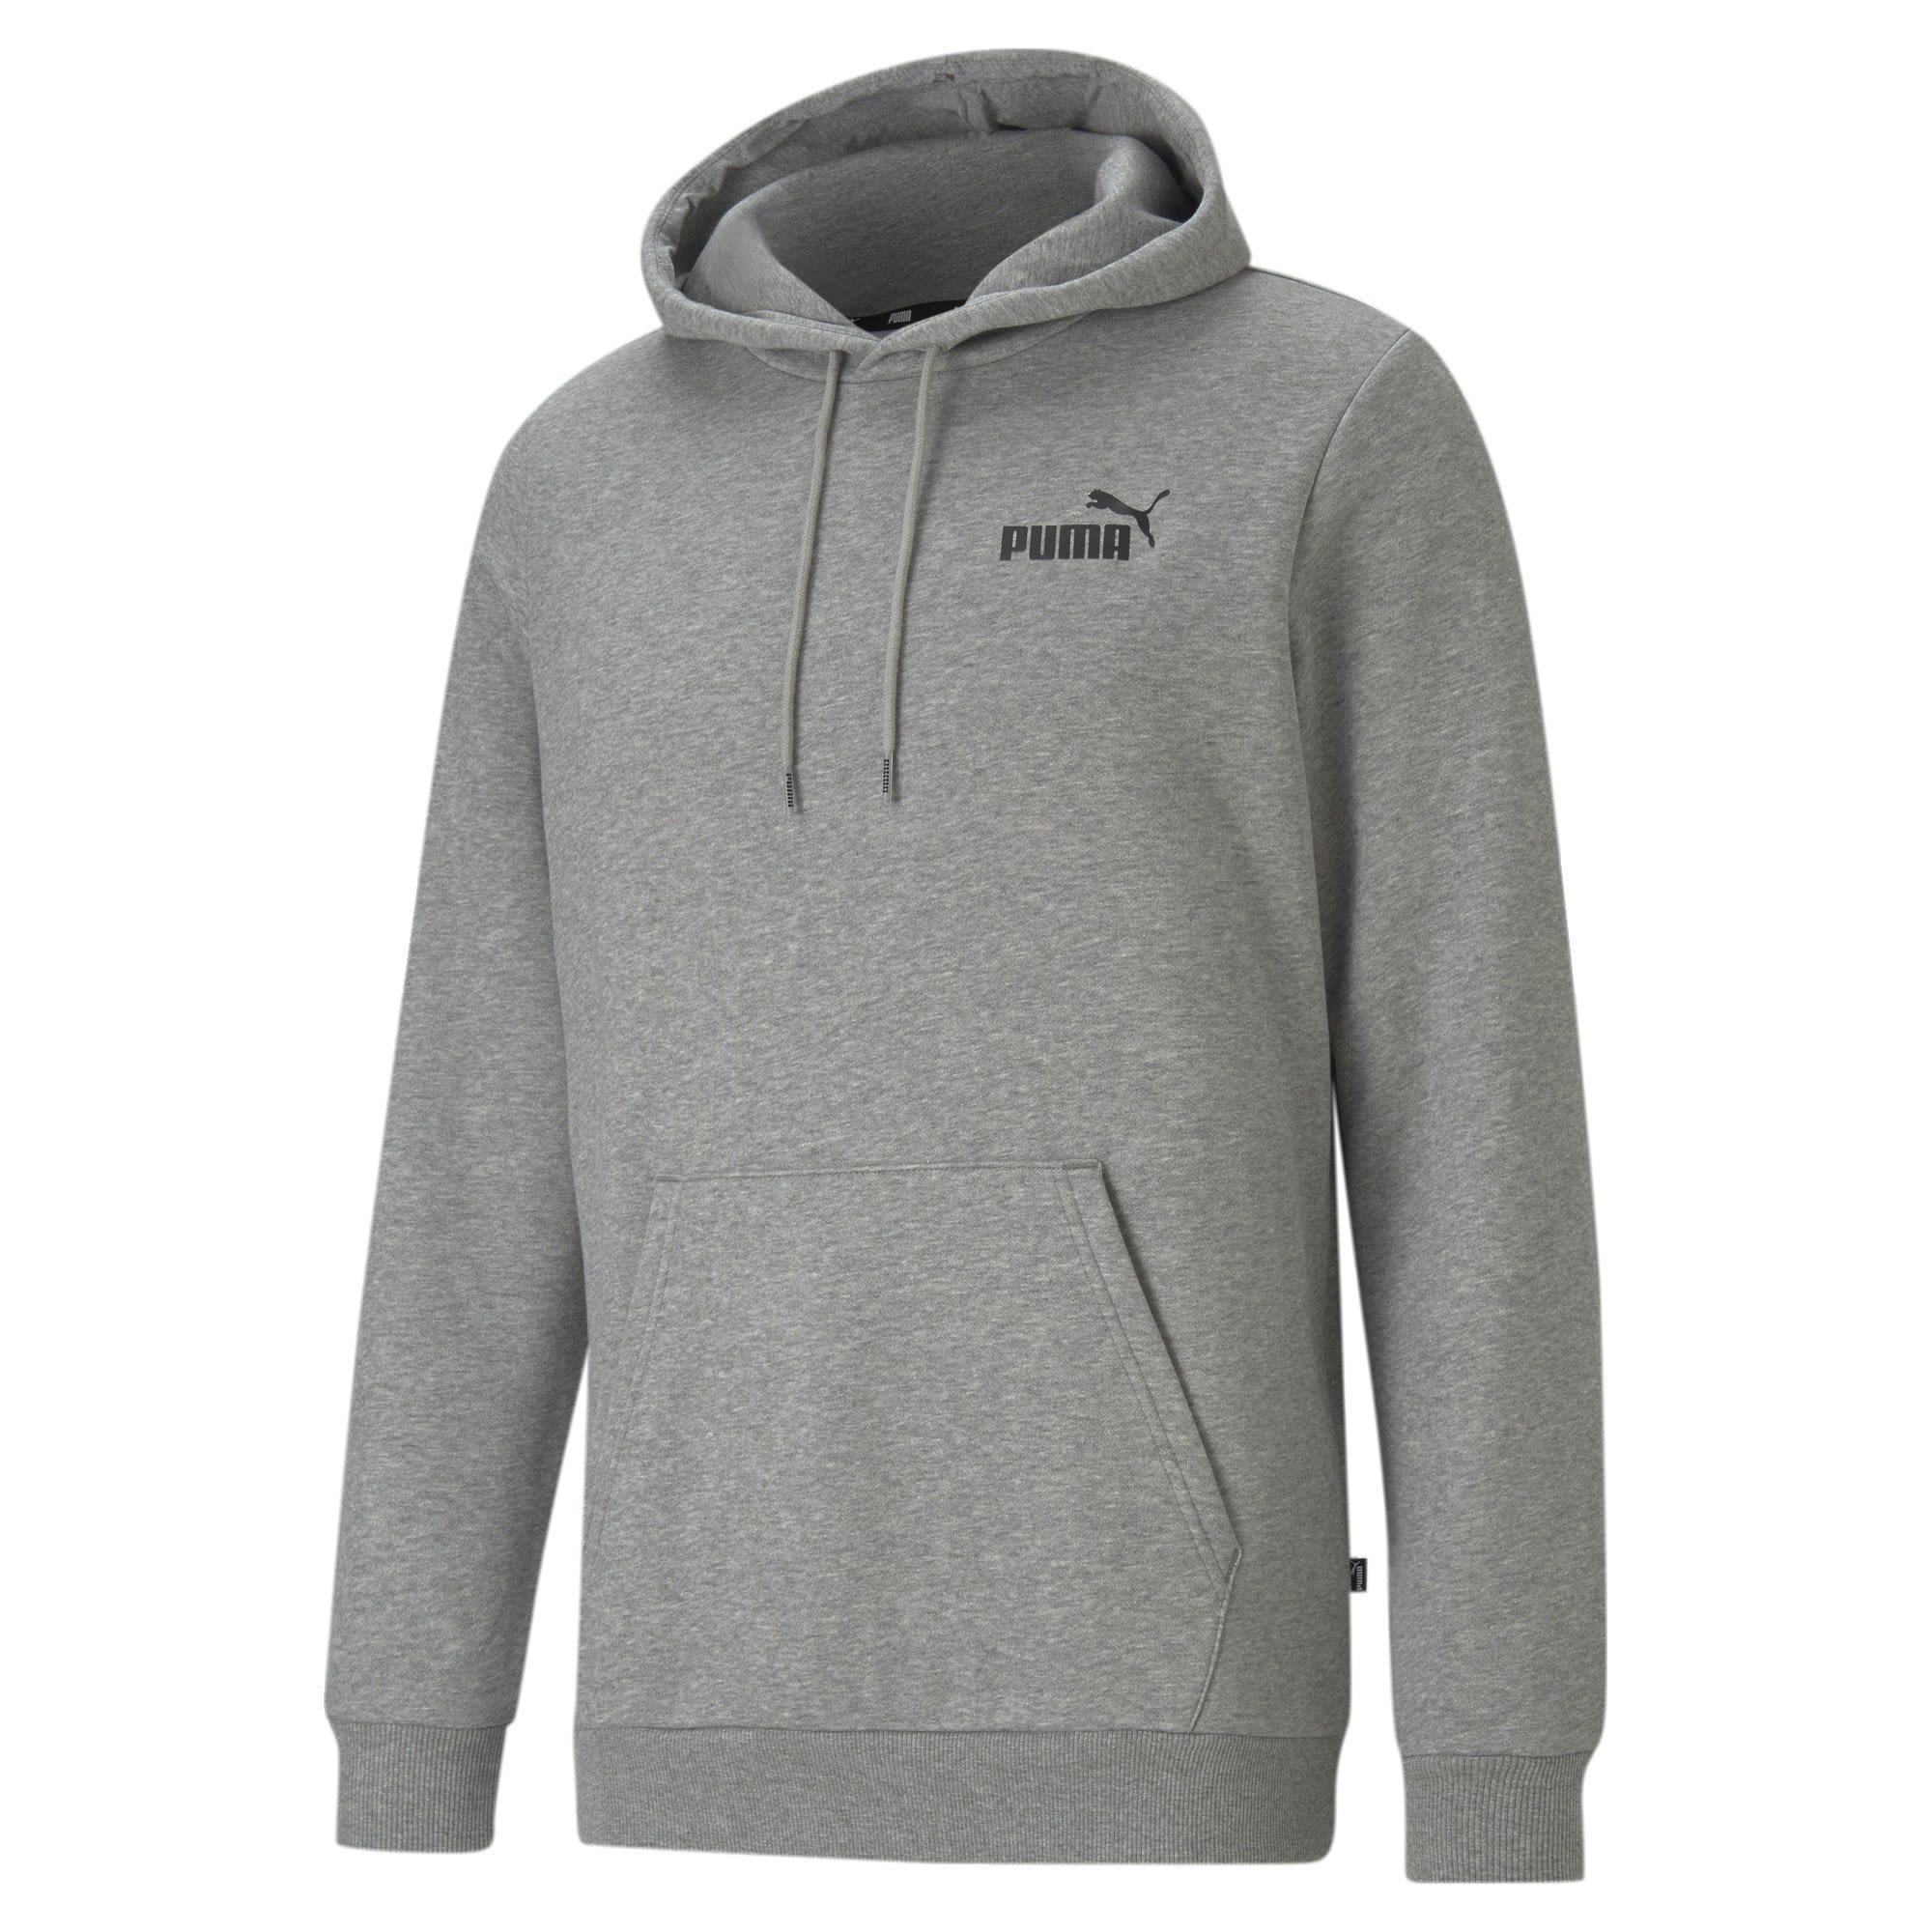 Puma Essentials Small Logo Hoodie FL Grau- Male Sweaters und Hoodies- Grsse S - Farbe Medium Gray Heather